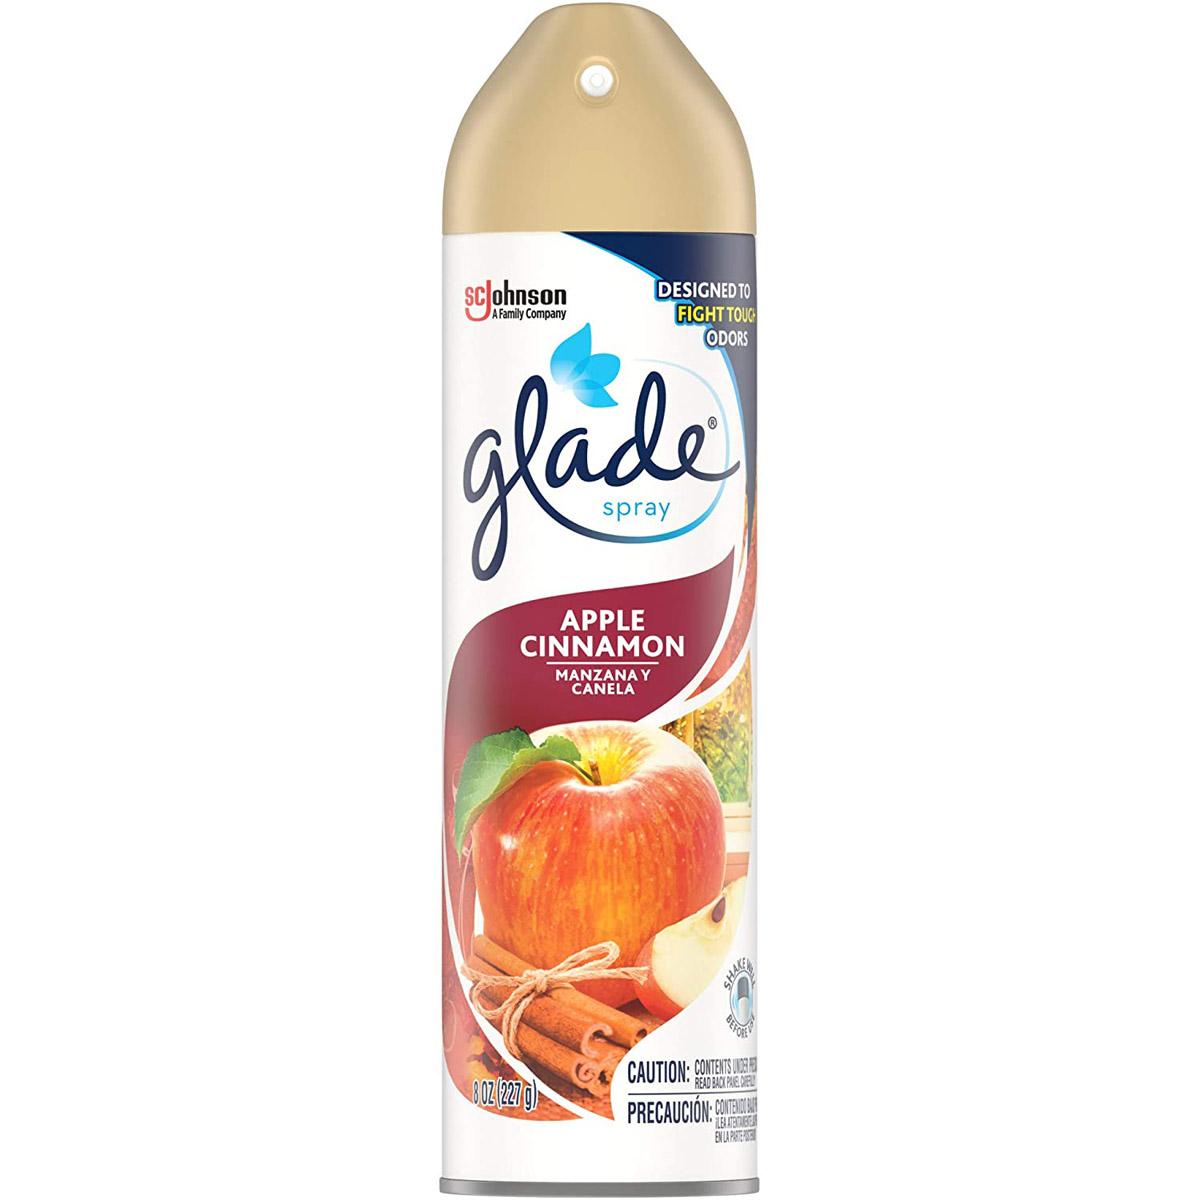 Glade Air 8oz Freshener for $0.88 Shipped